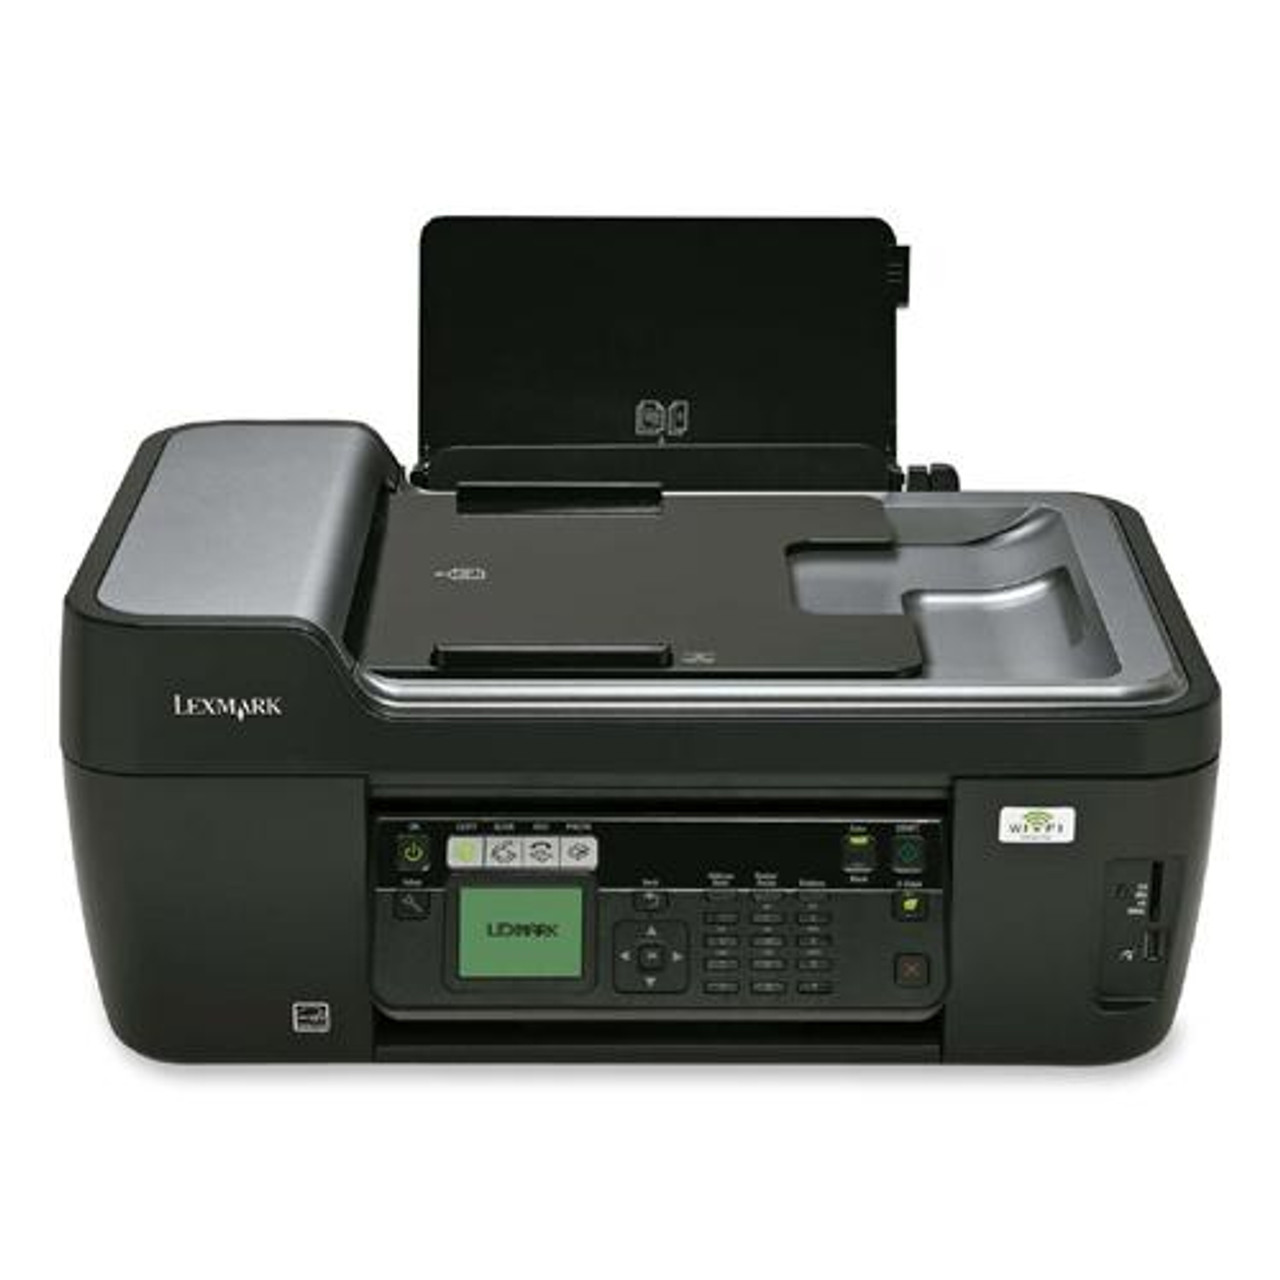 90T6005 - Lexmark Pro 205 Multifunction Printer Color 33ppm Mono 30ppm Color 4800 x 1200dpi Printer Scanner Copier Fax USB USB Wi-Fi PC (Refurbished)